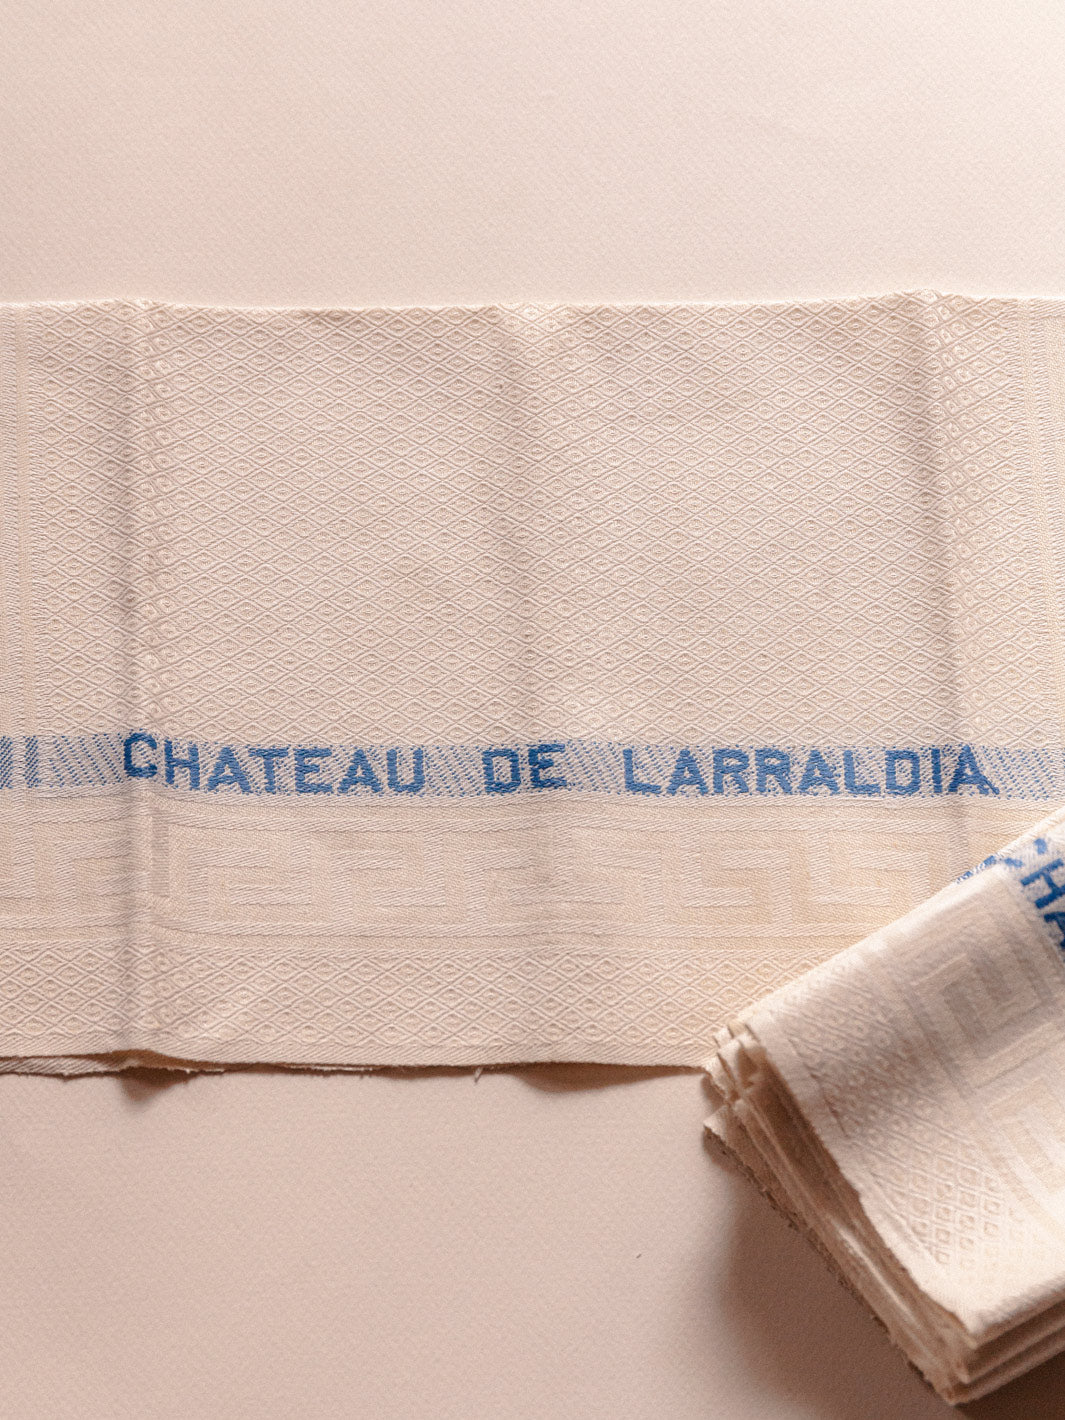 Set of 12 Chateau de Larraldia napkins